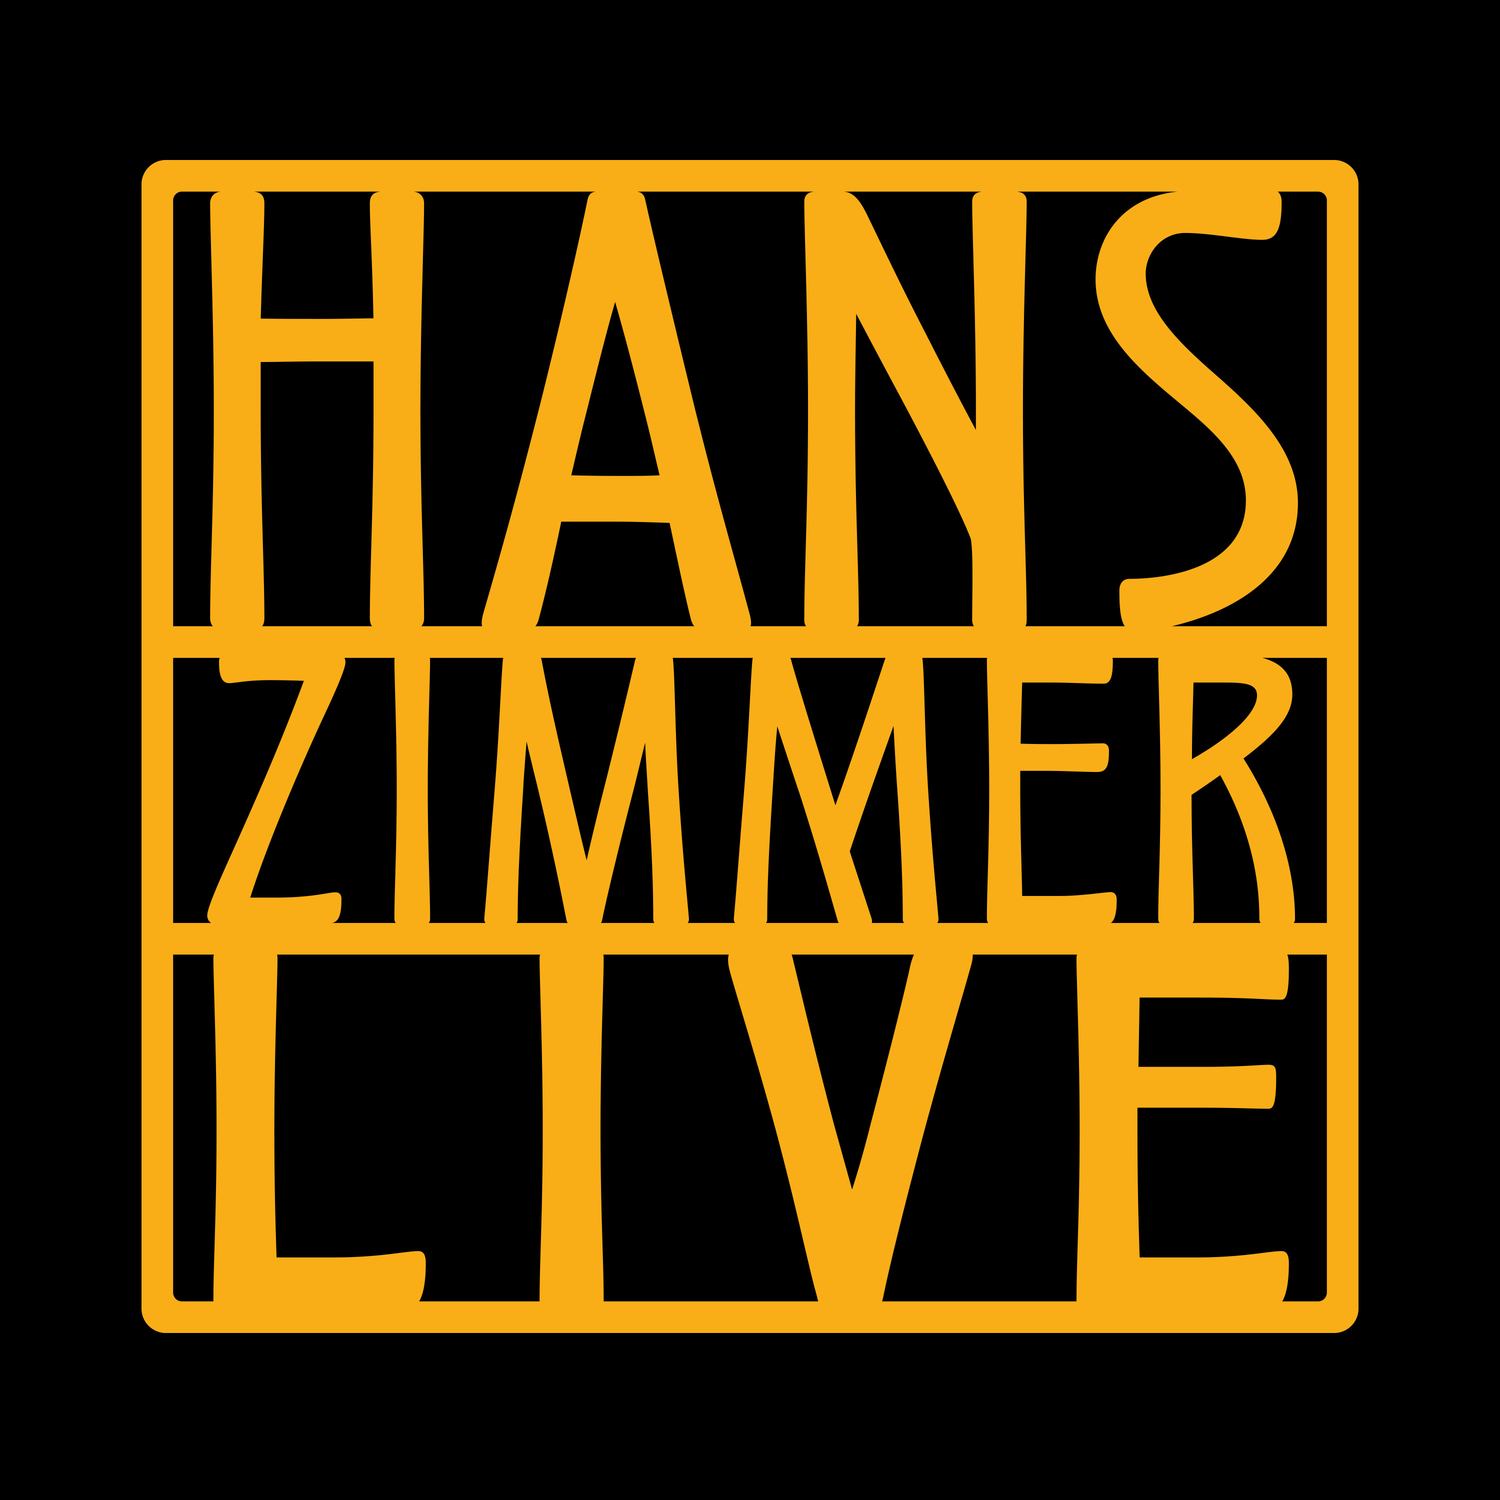 Hans Zimmer Live Album Cover